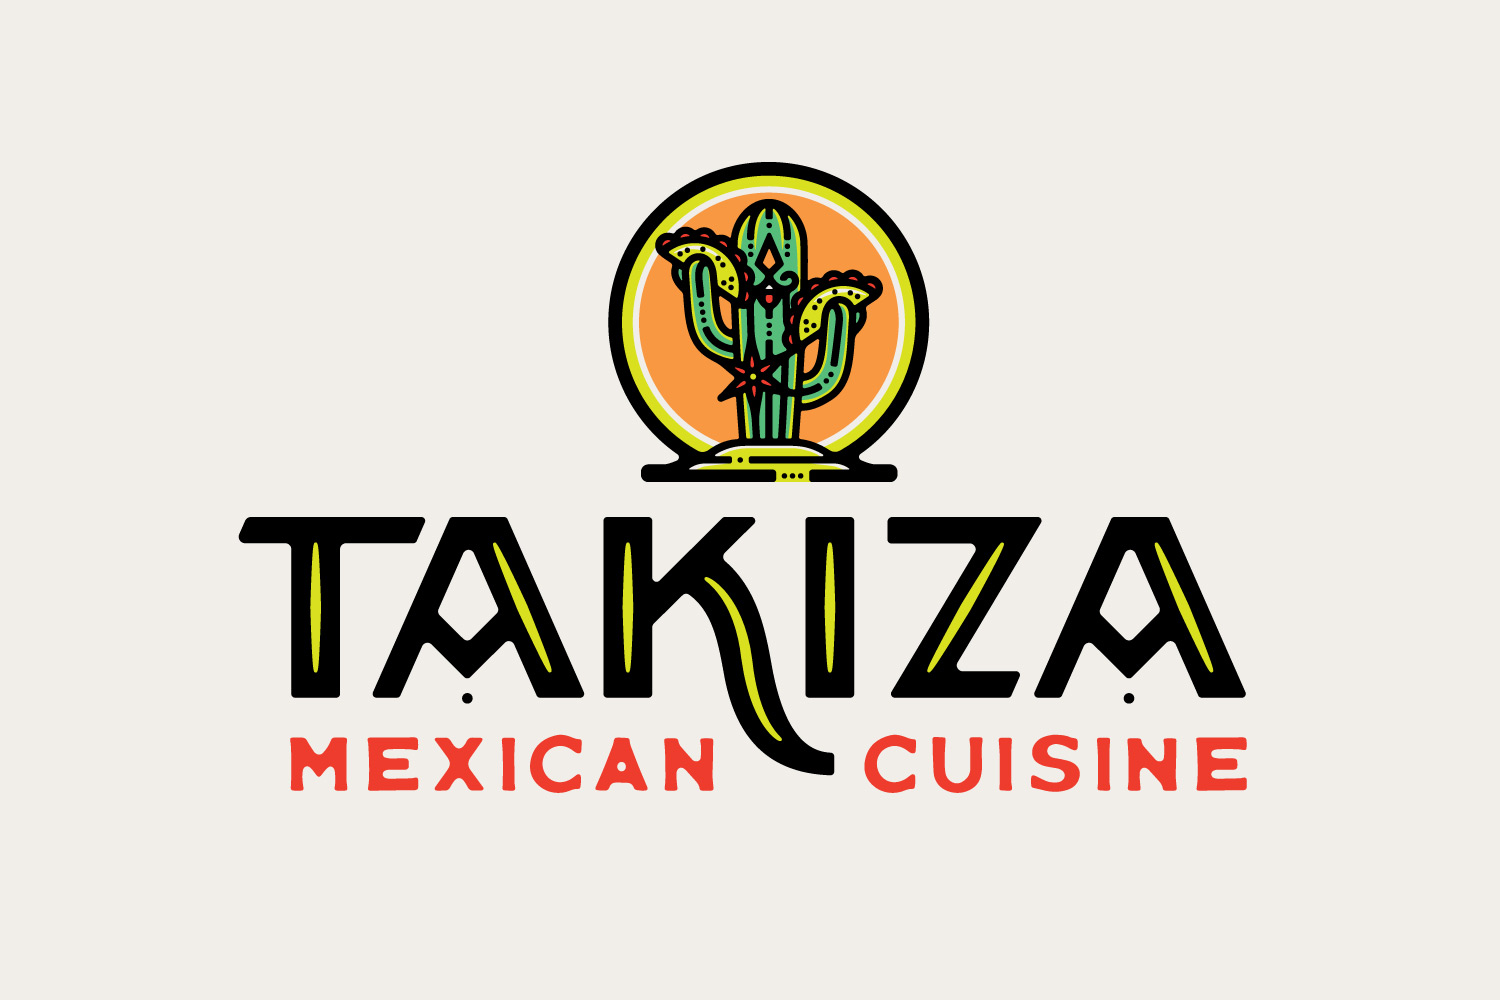 Takiza Mexican Cuisine logo with cream background